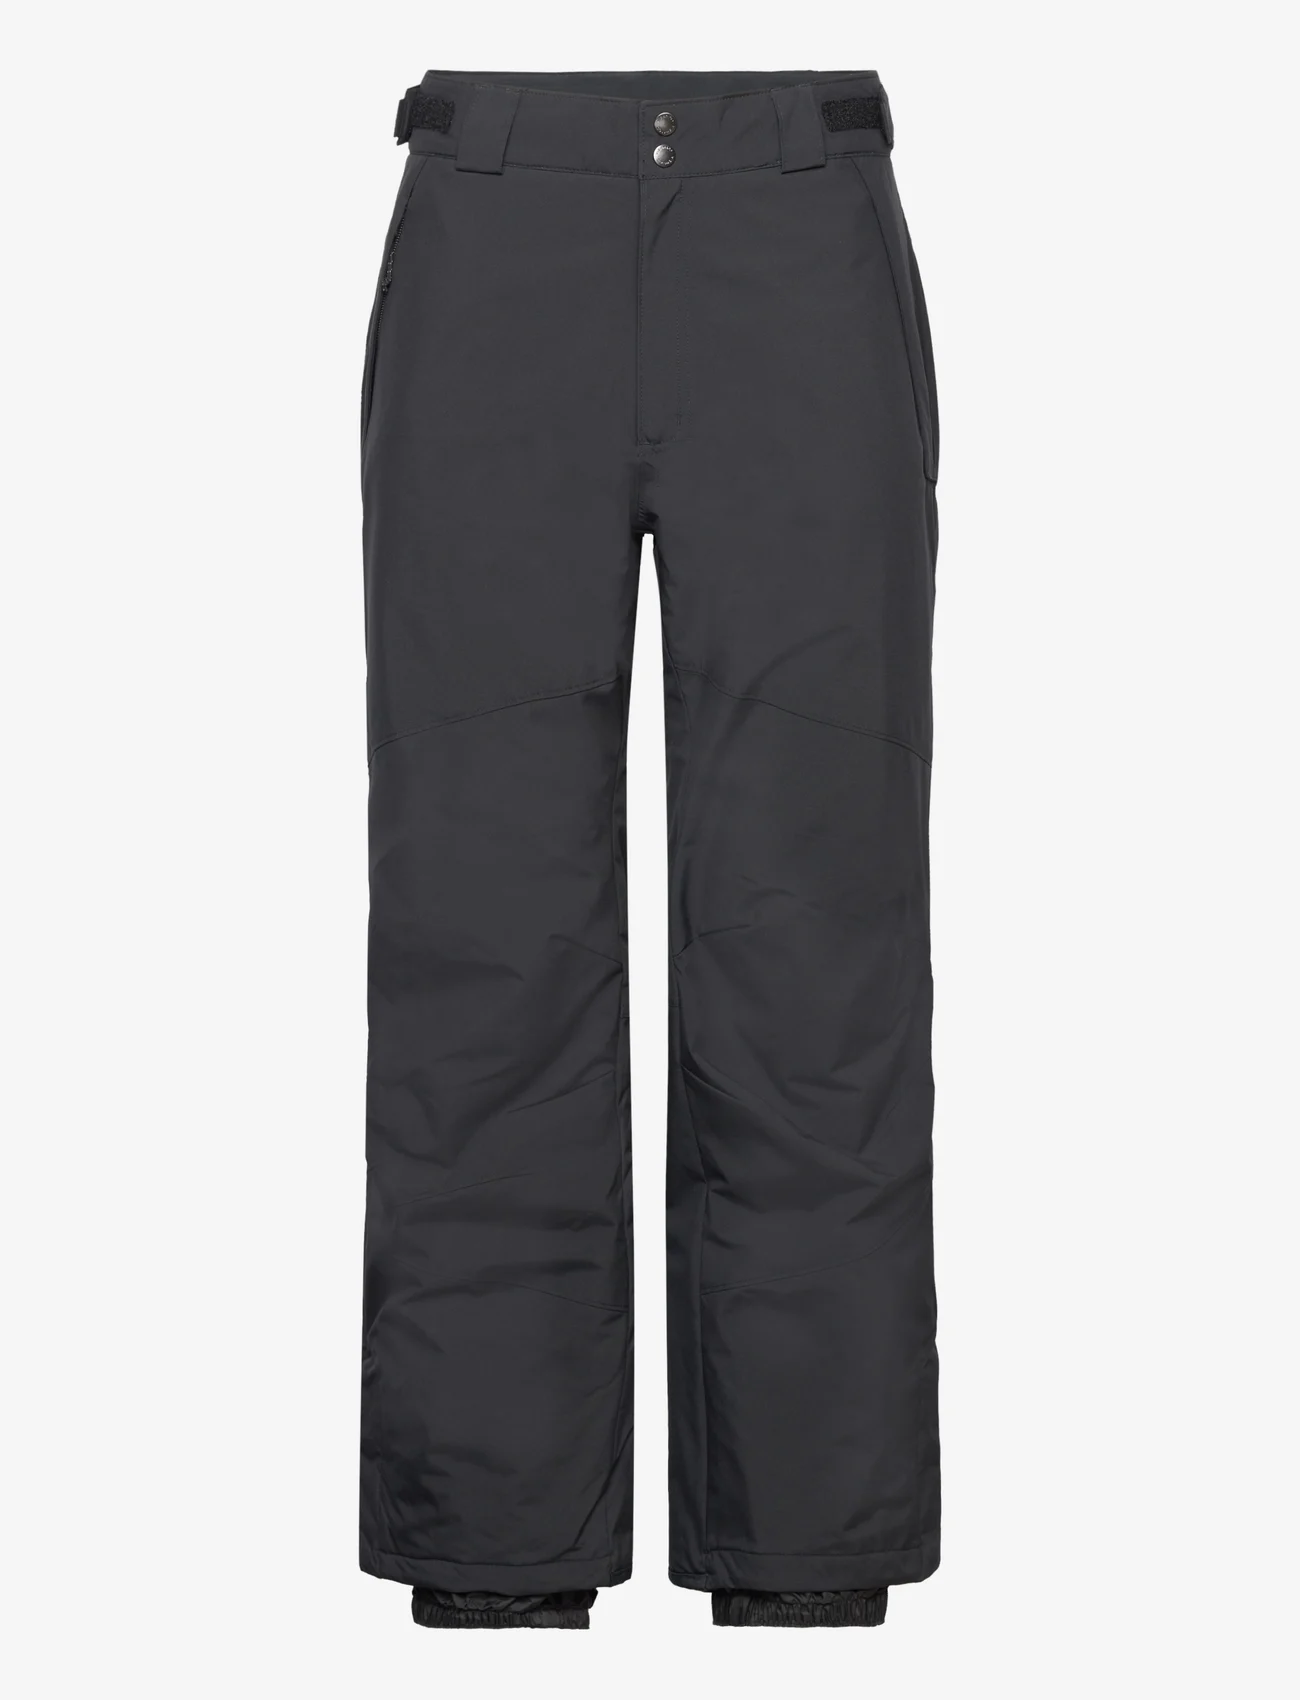 Columbia Sportswear - Shafer Canyon Pant - skibukser - black - 0